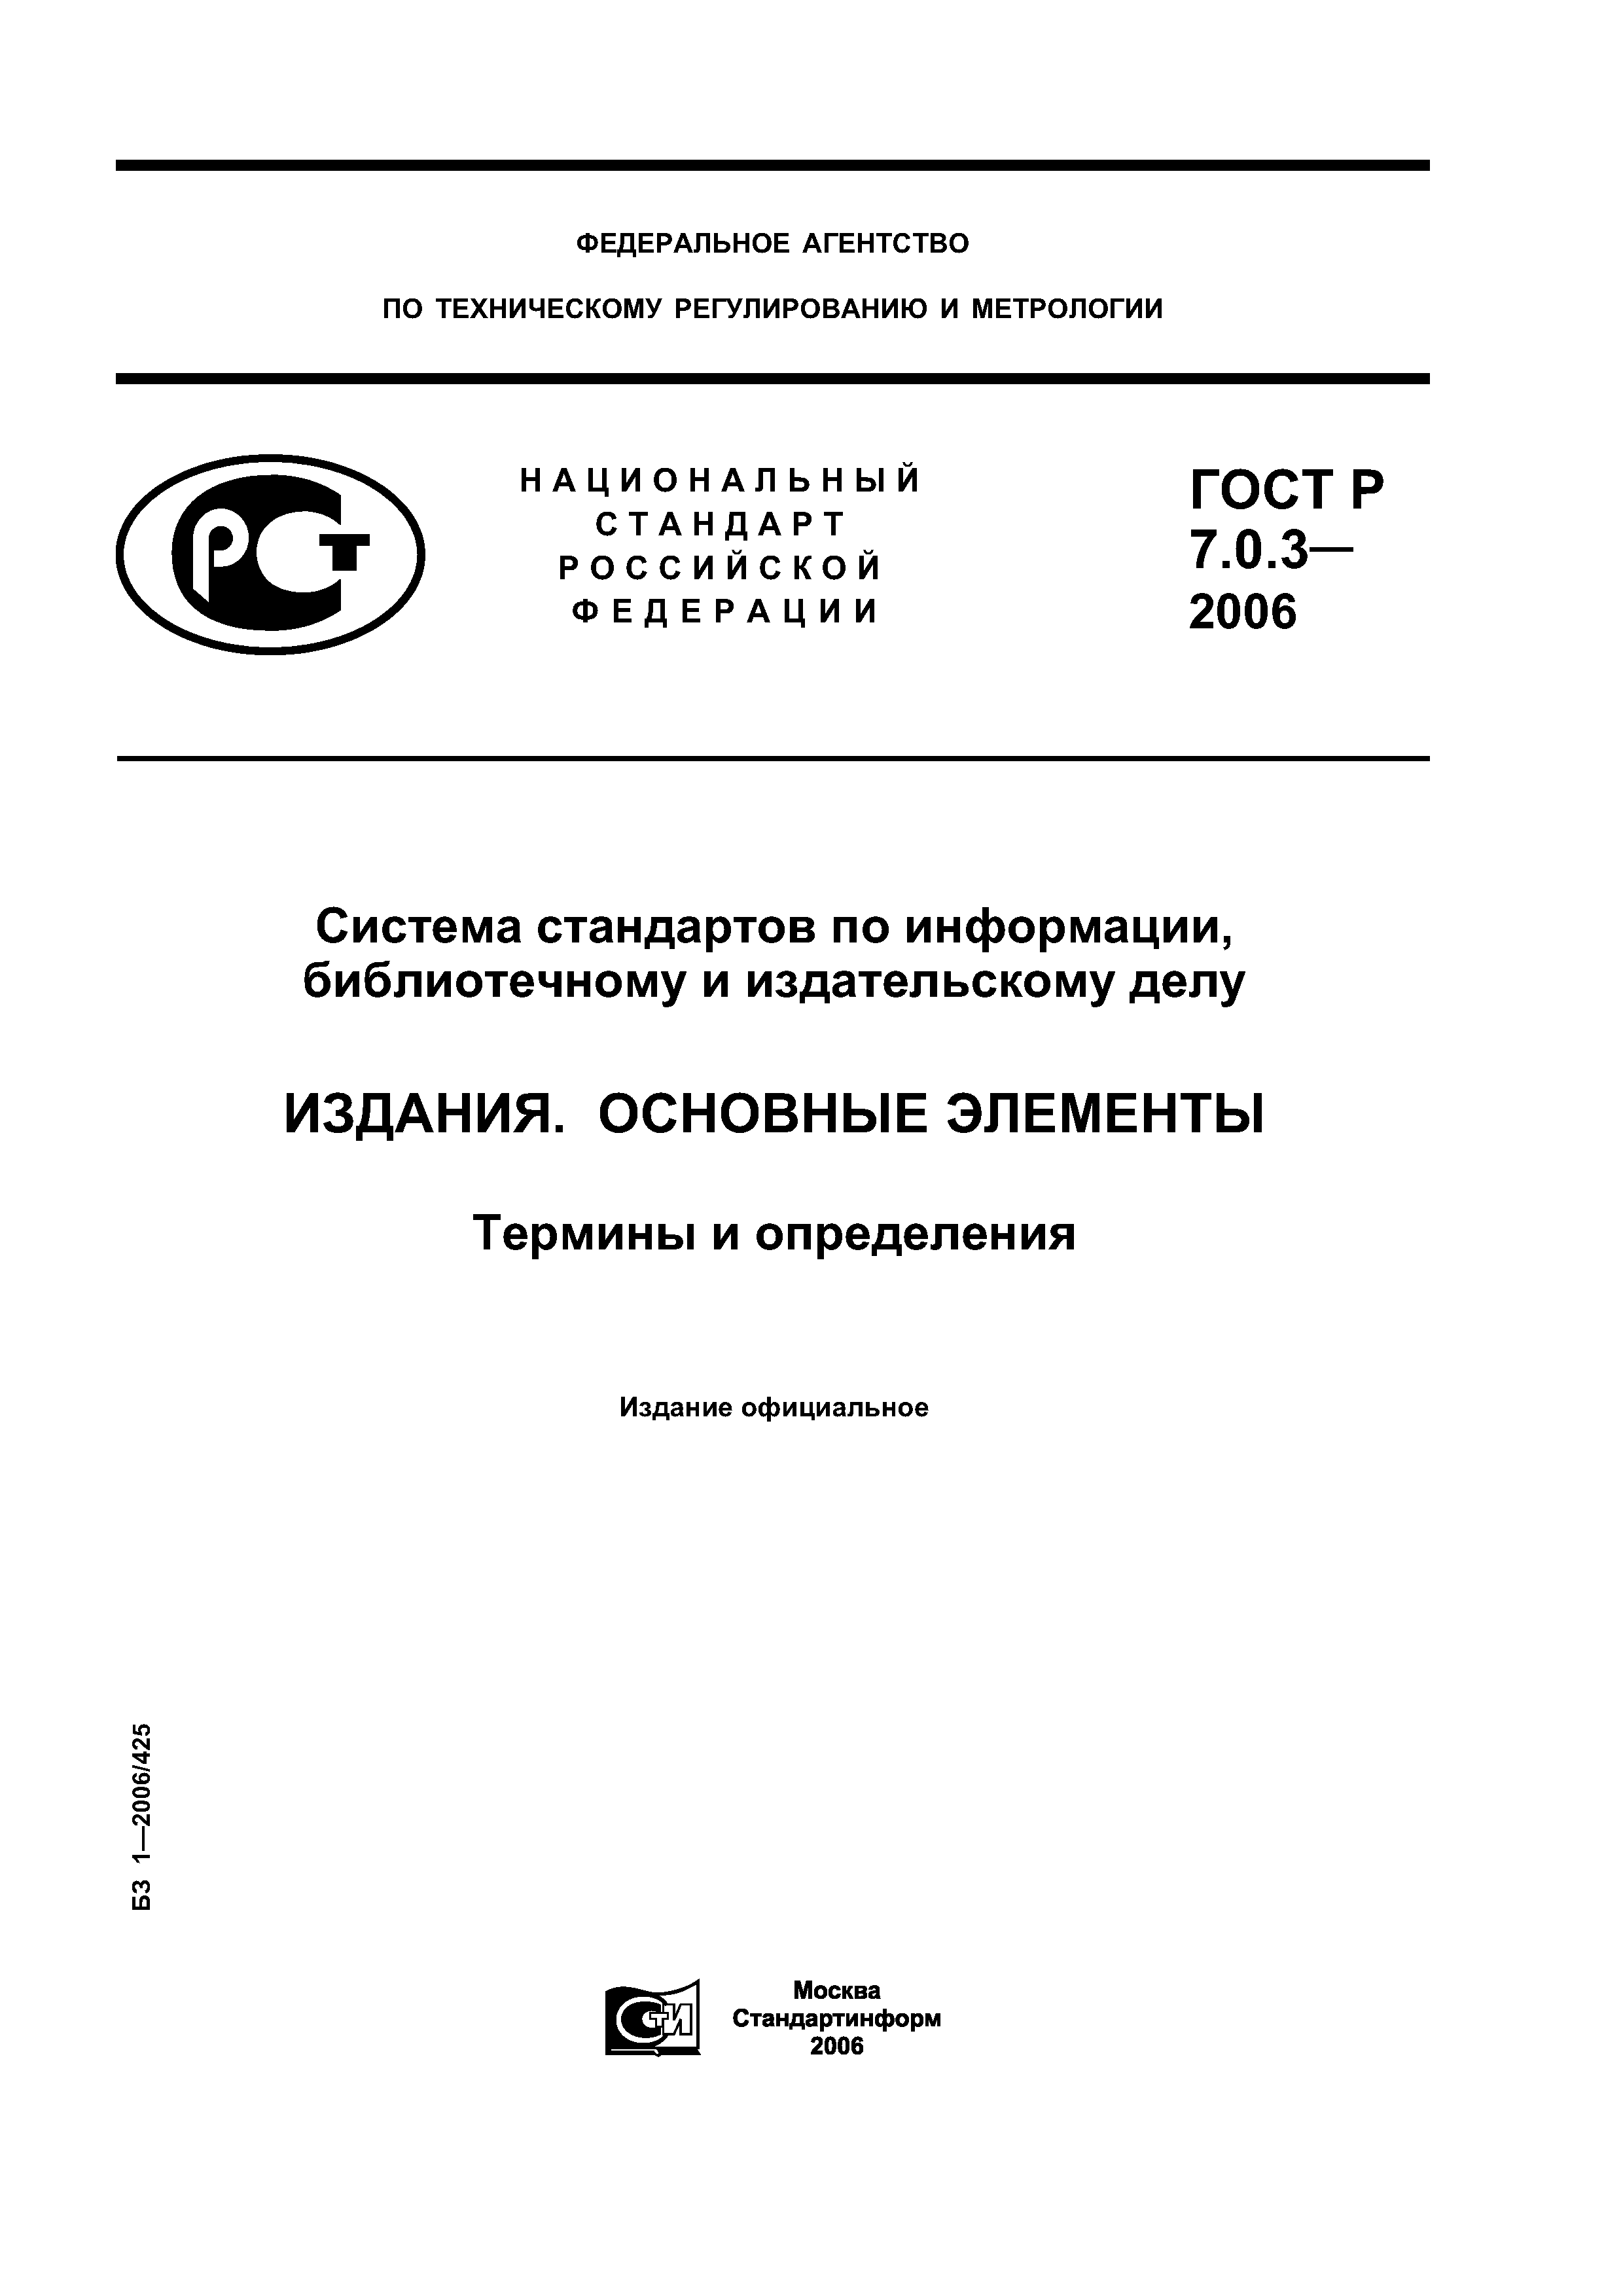 ГОСТ Р 7.0.3-2006